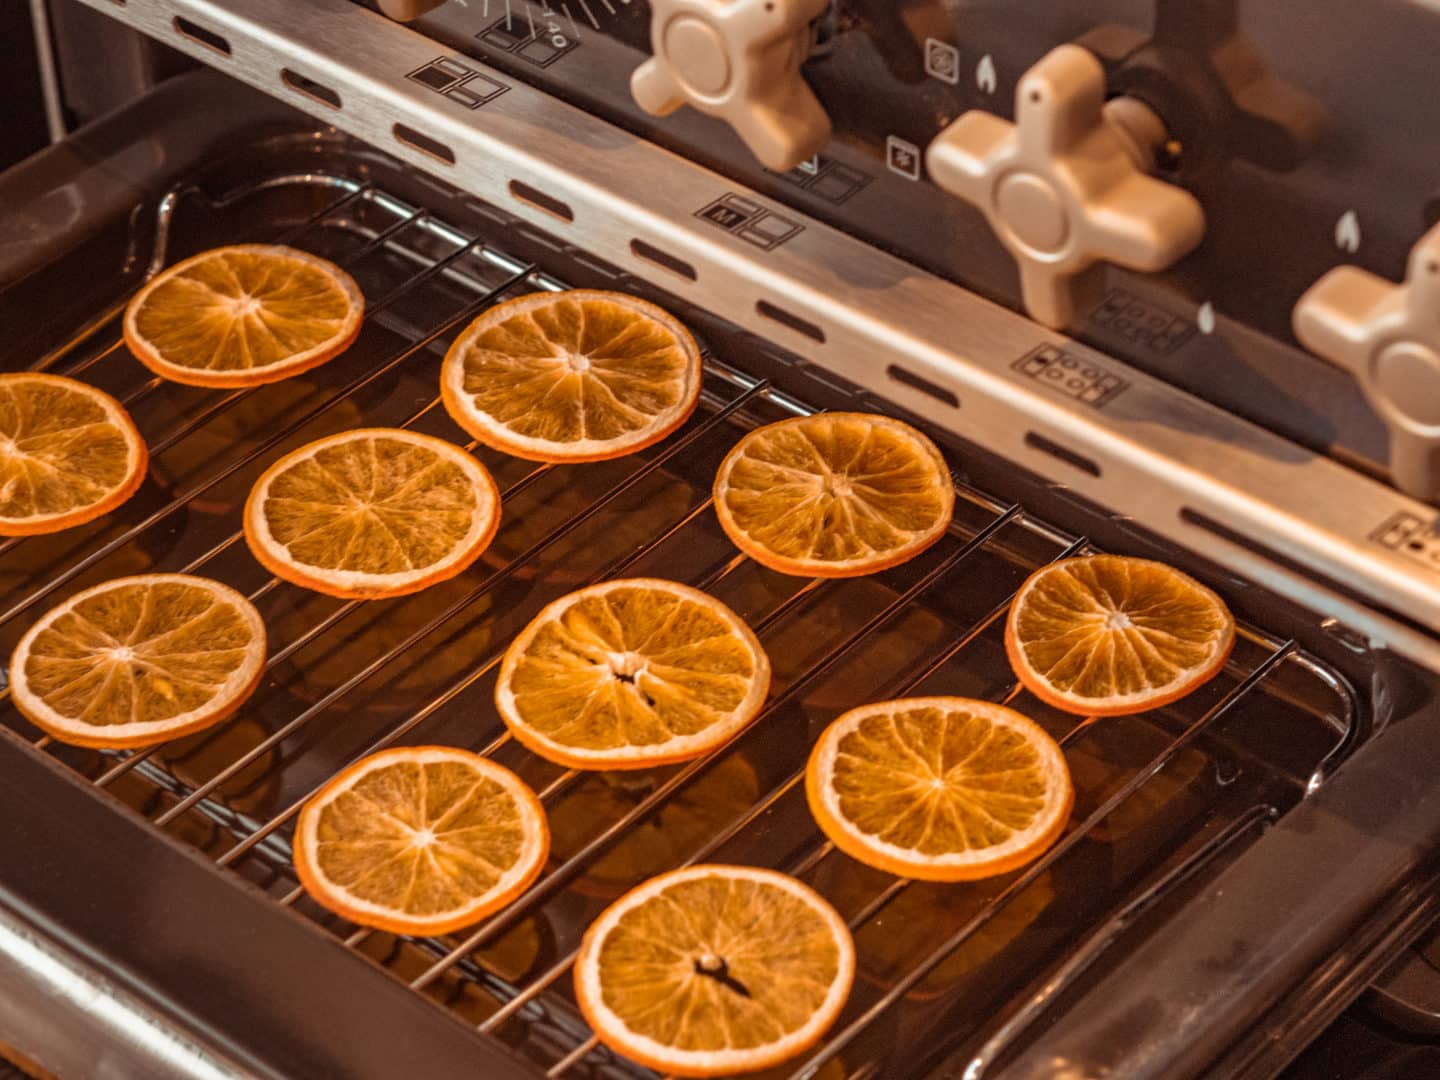 Drying oranges